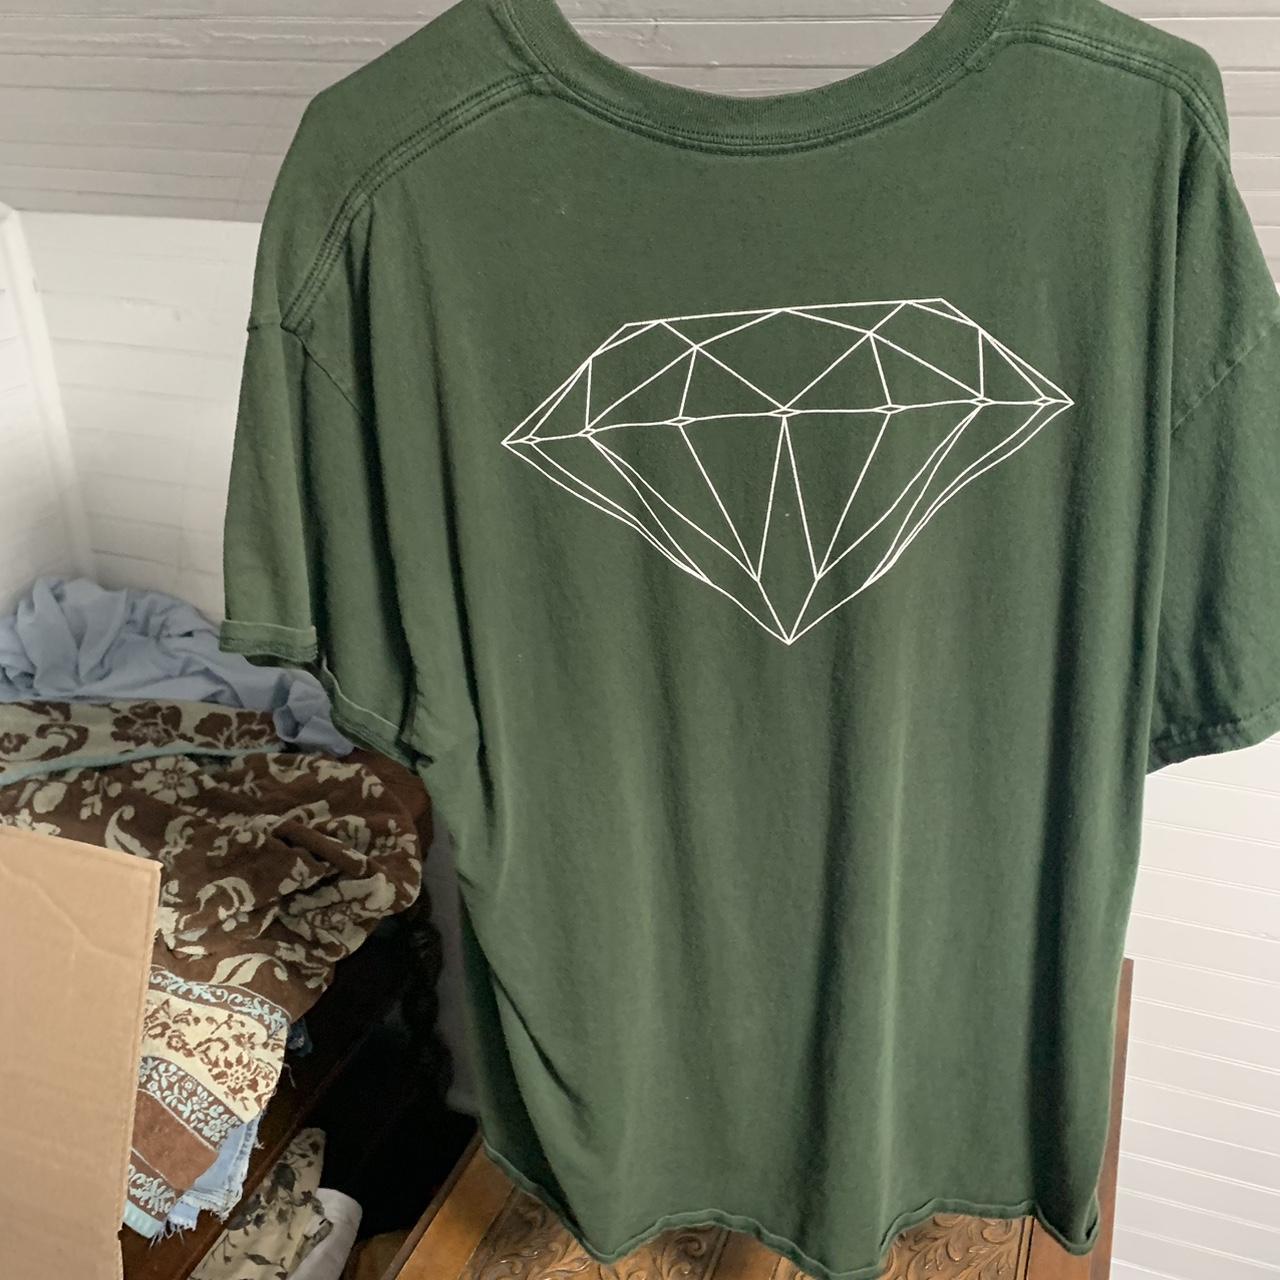 Diamond Supply Co. Men's T-shirt (3)